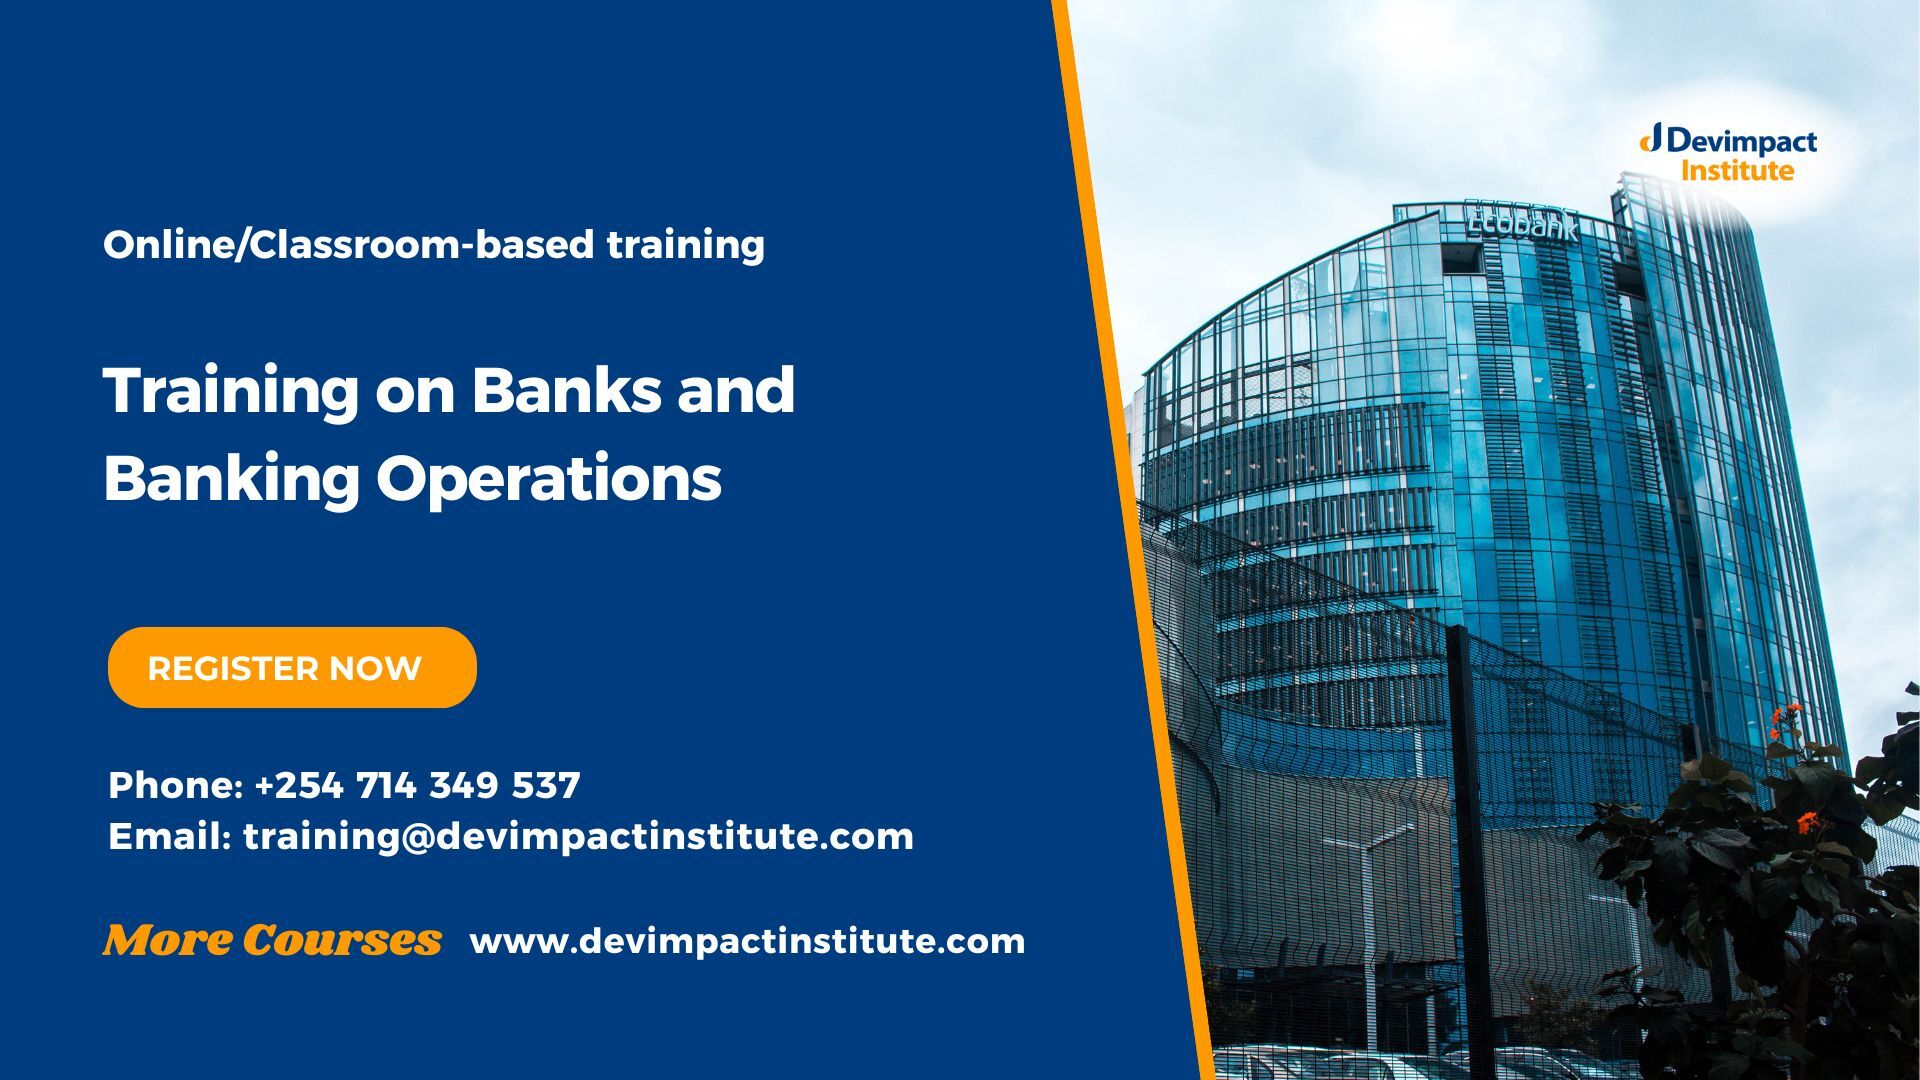 Training on Banks and Banking Operations, Devimpact Institute, Nairobi, Kenya